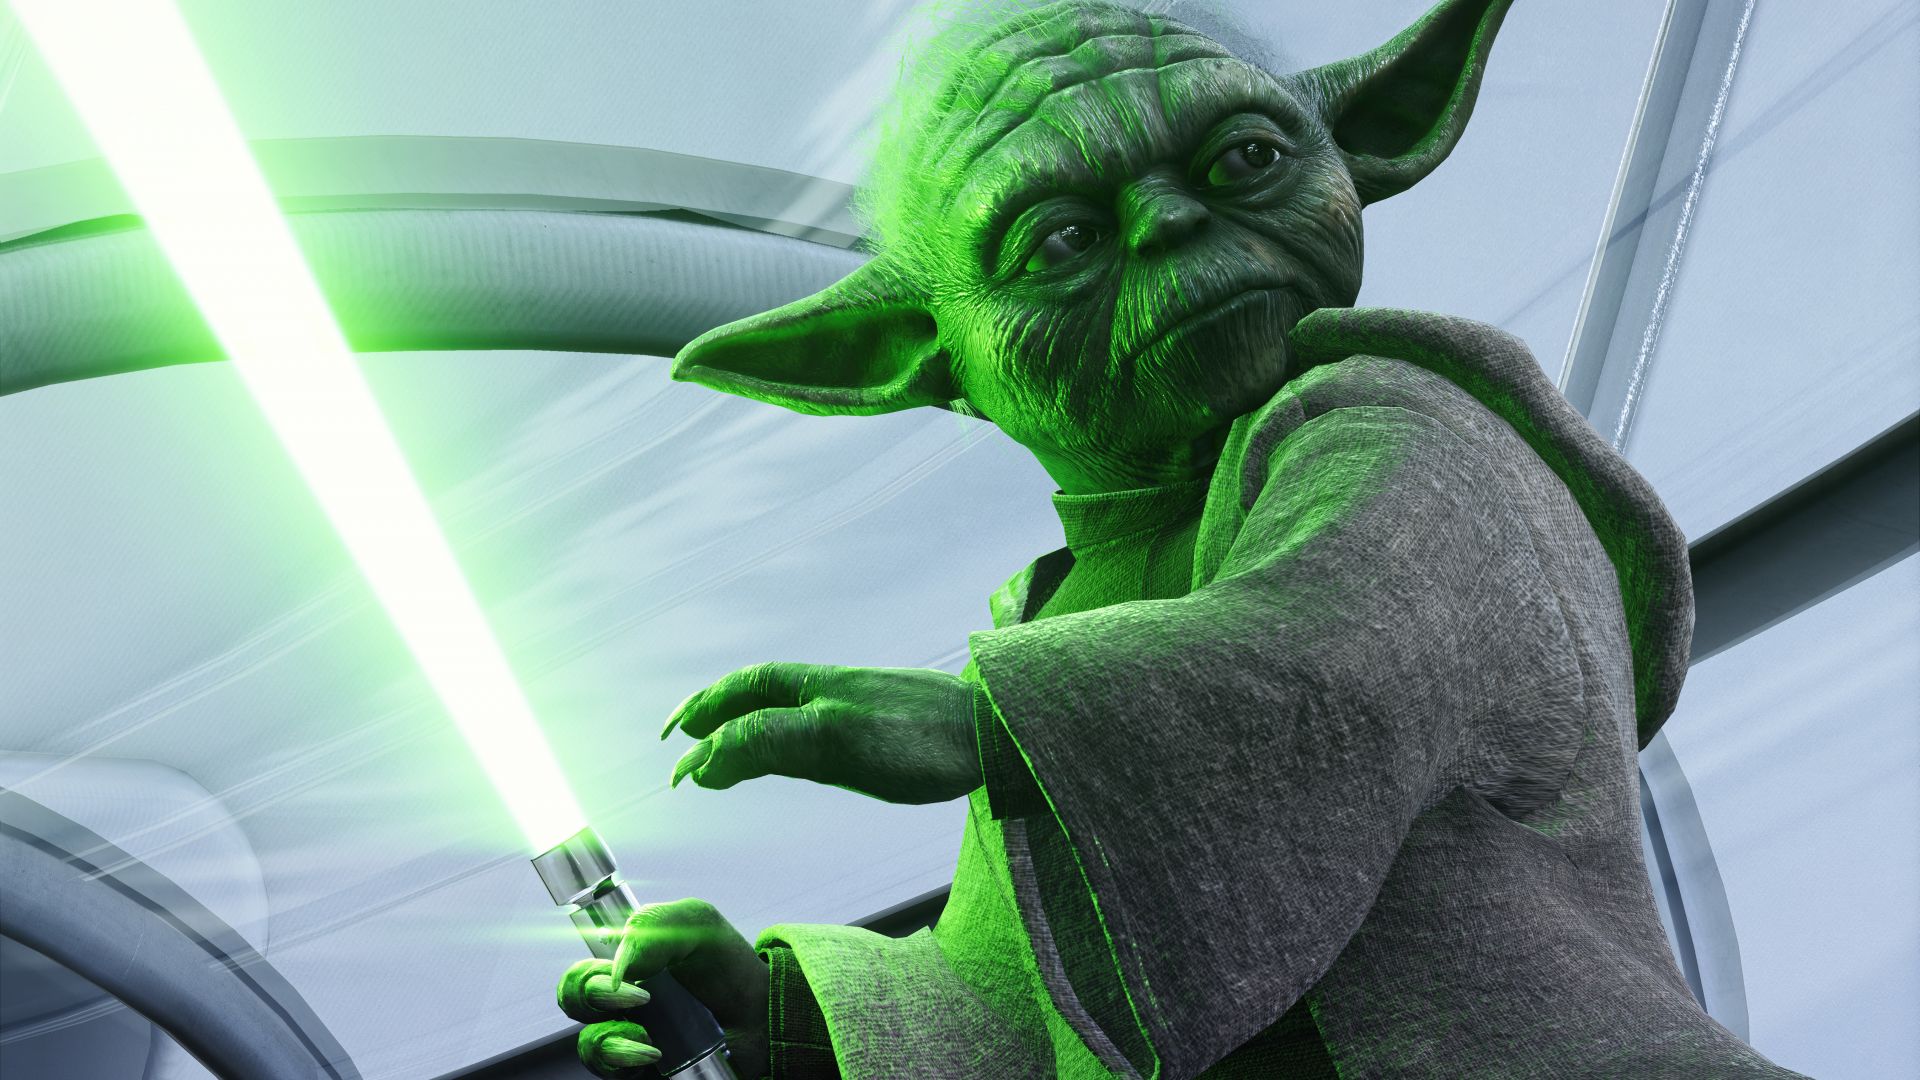 Desktop Wallpaper Yoda, Star Wars L Battlefront Video Game, 5k, HD Image, Picture, Background, 9b441f